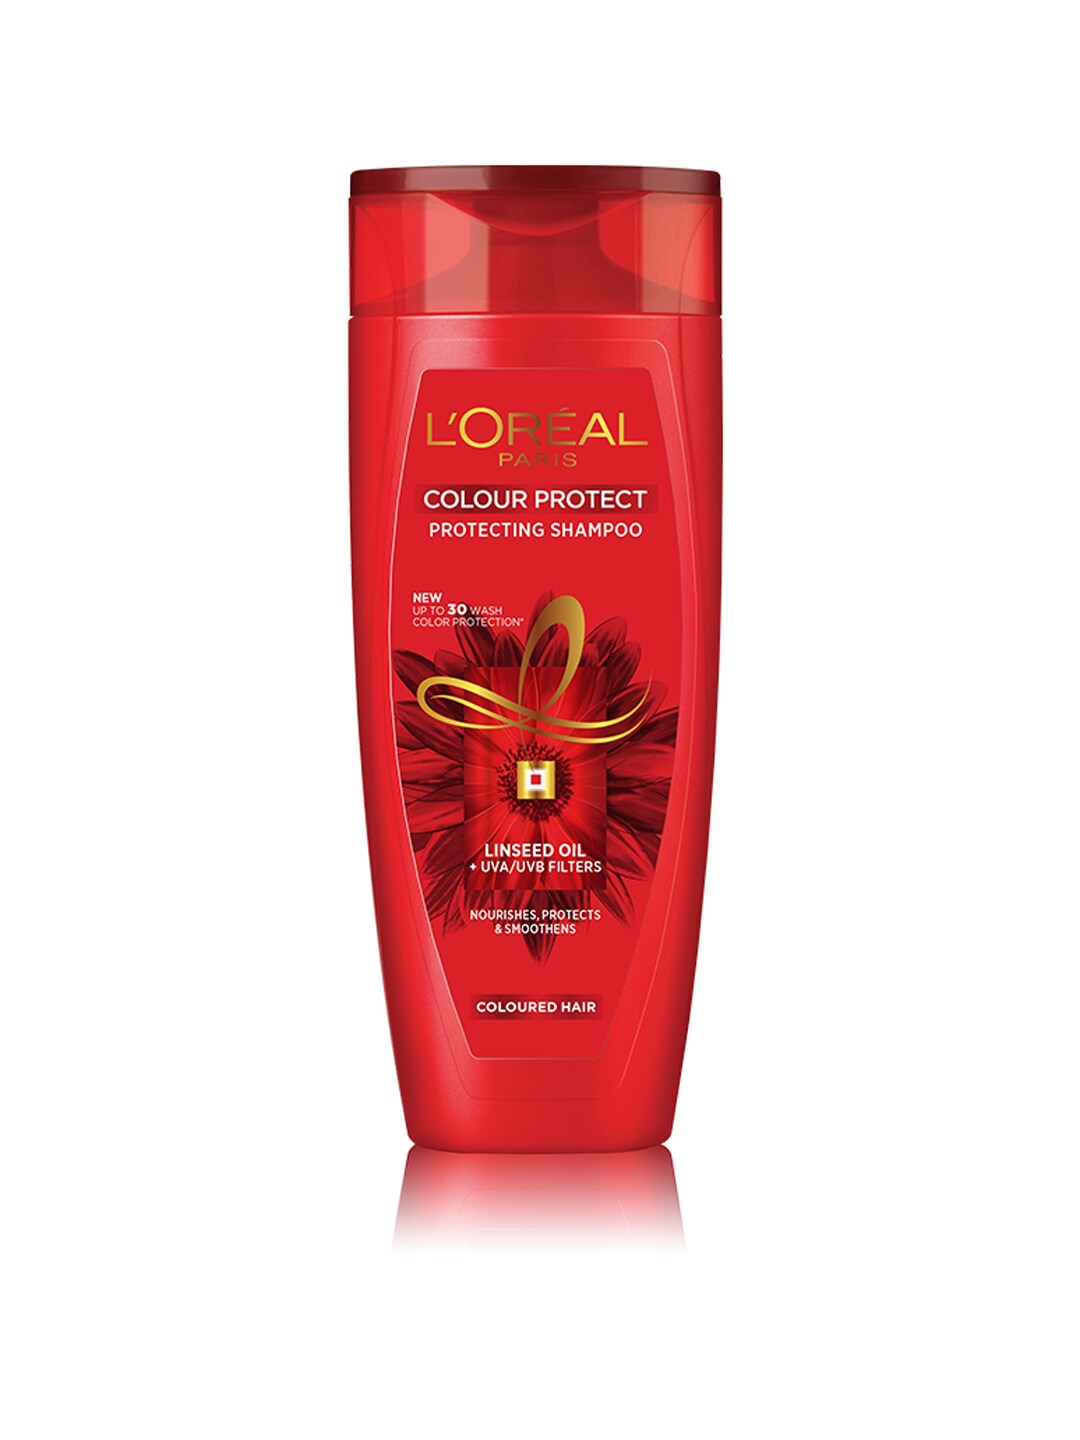 LOreal Paris Colour Protect Shampoo 360 ml Price in India